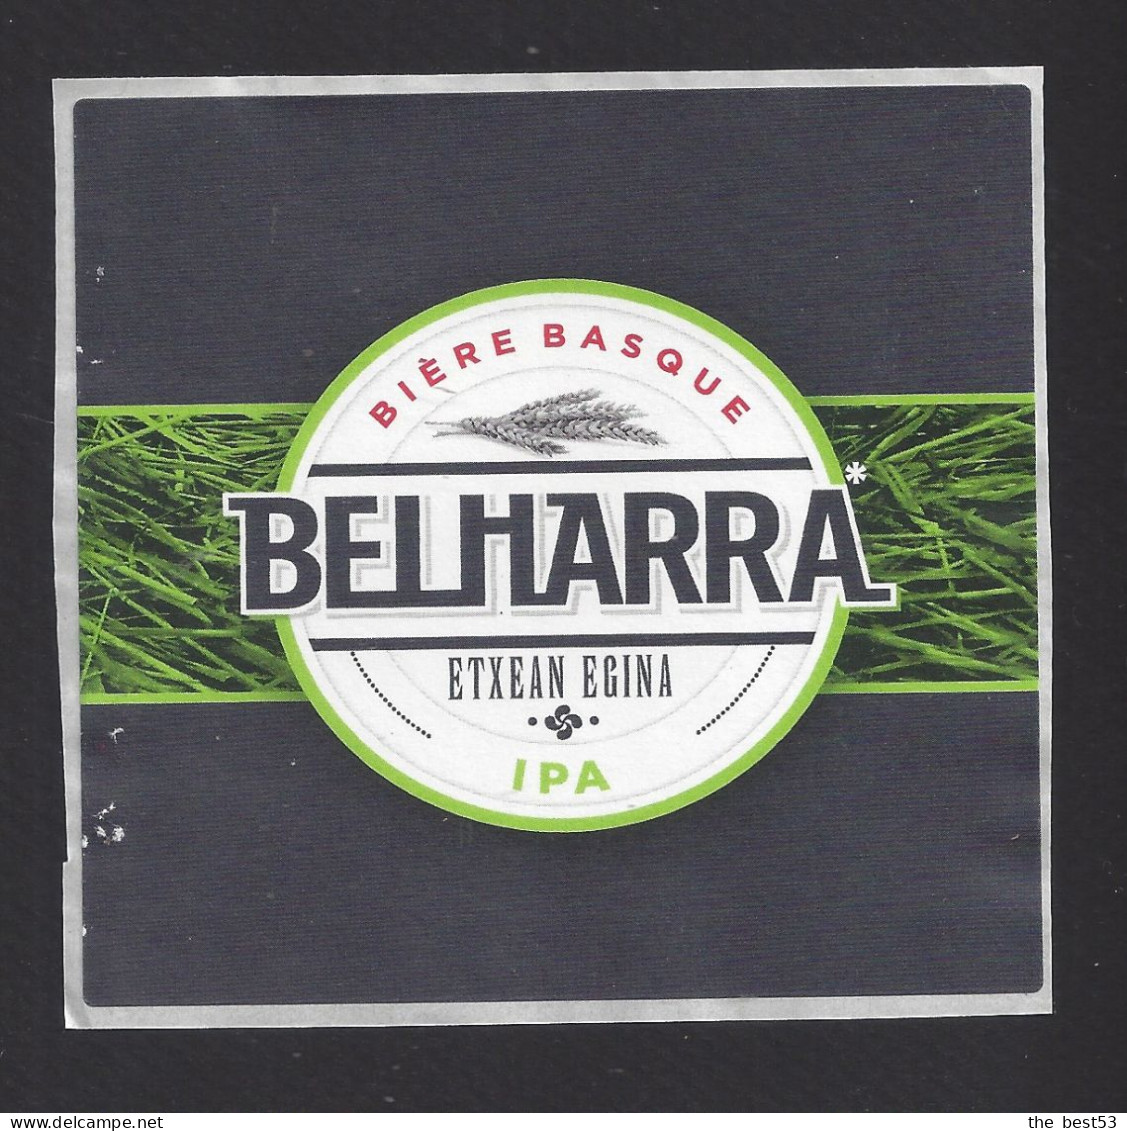 Etiquette De Bière IPA  -  Brasserie Belharra  à  Bayonne   (64) - Cerveza